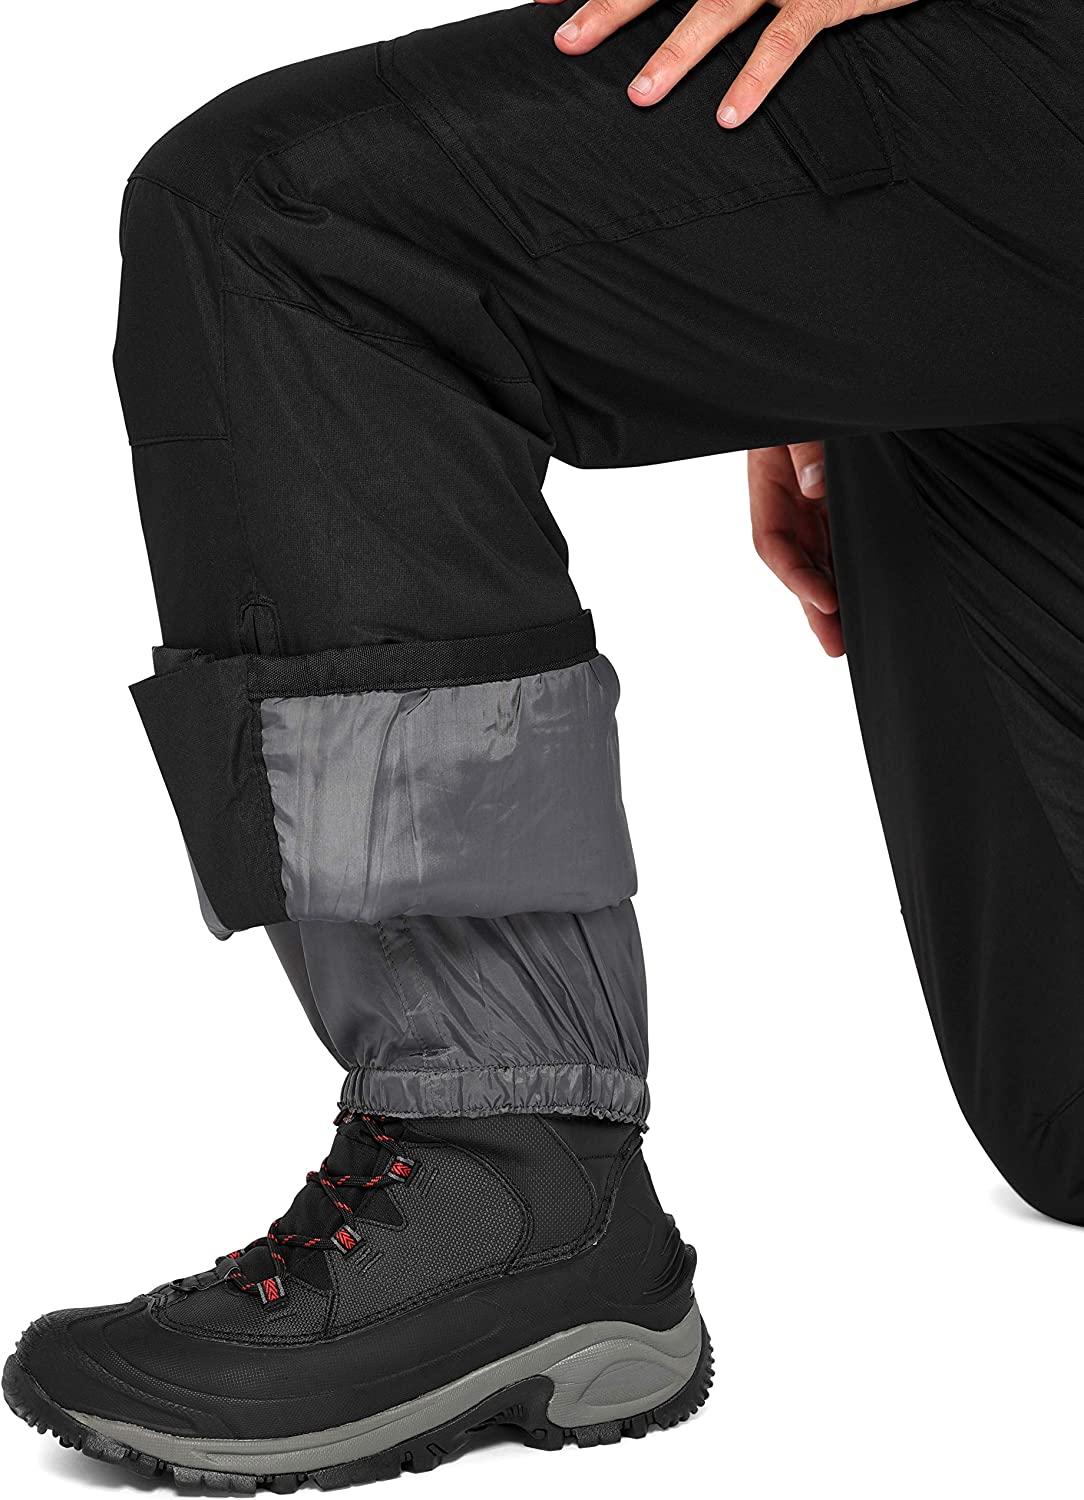 Arctix Kids Snow Pants with Reinforced Knees and Seat Medium Black